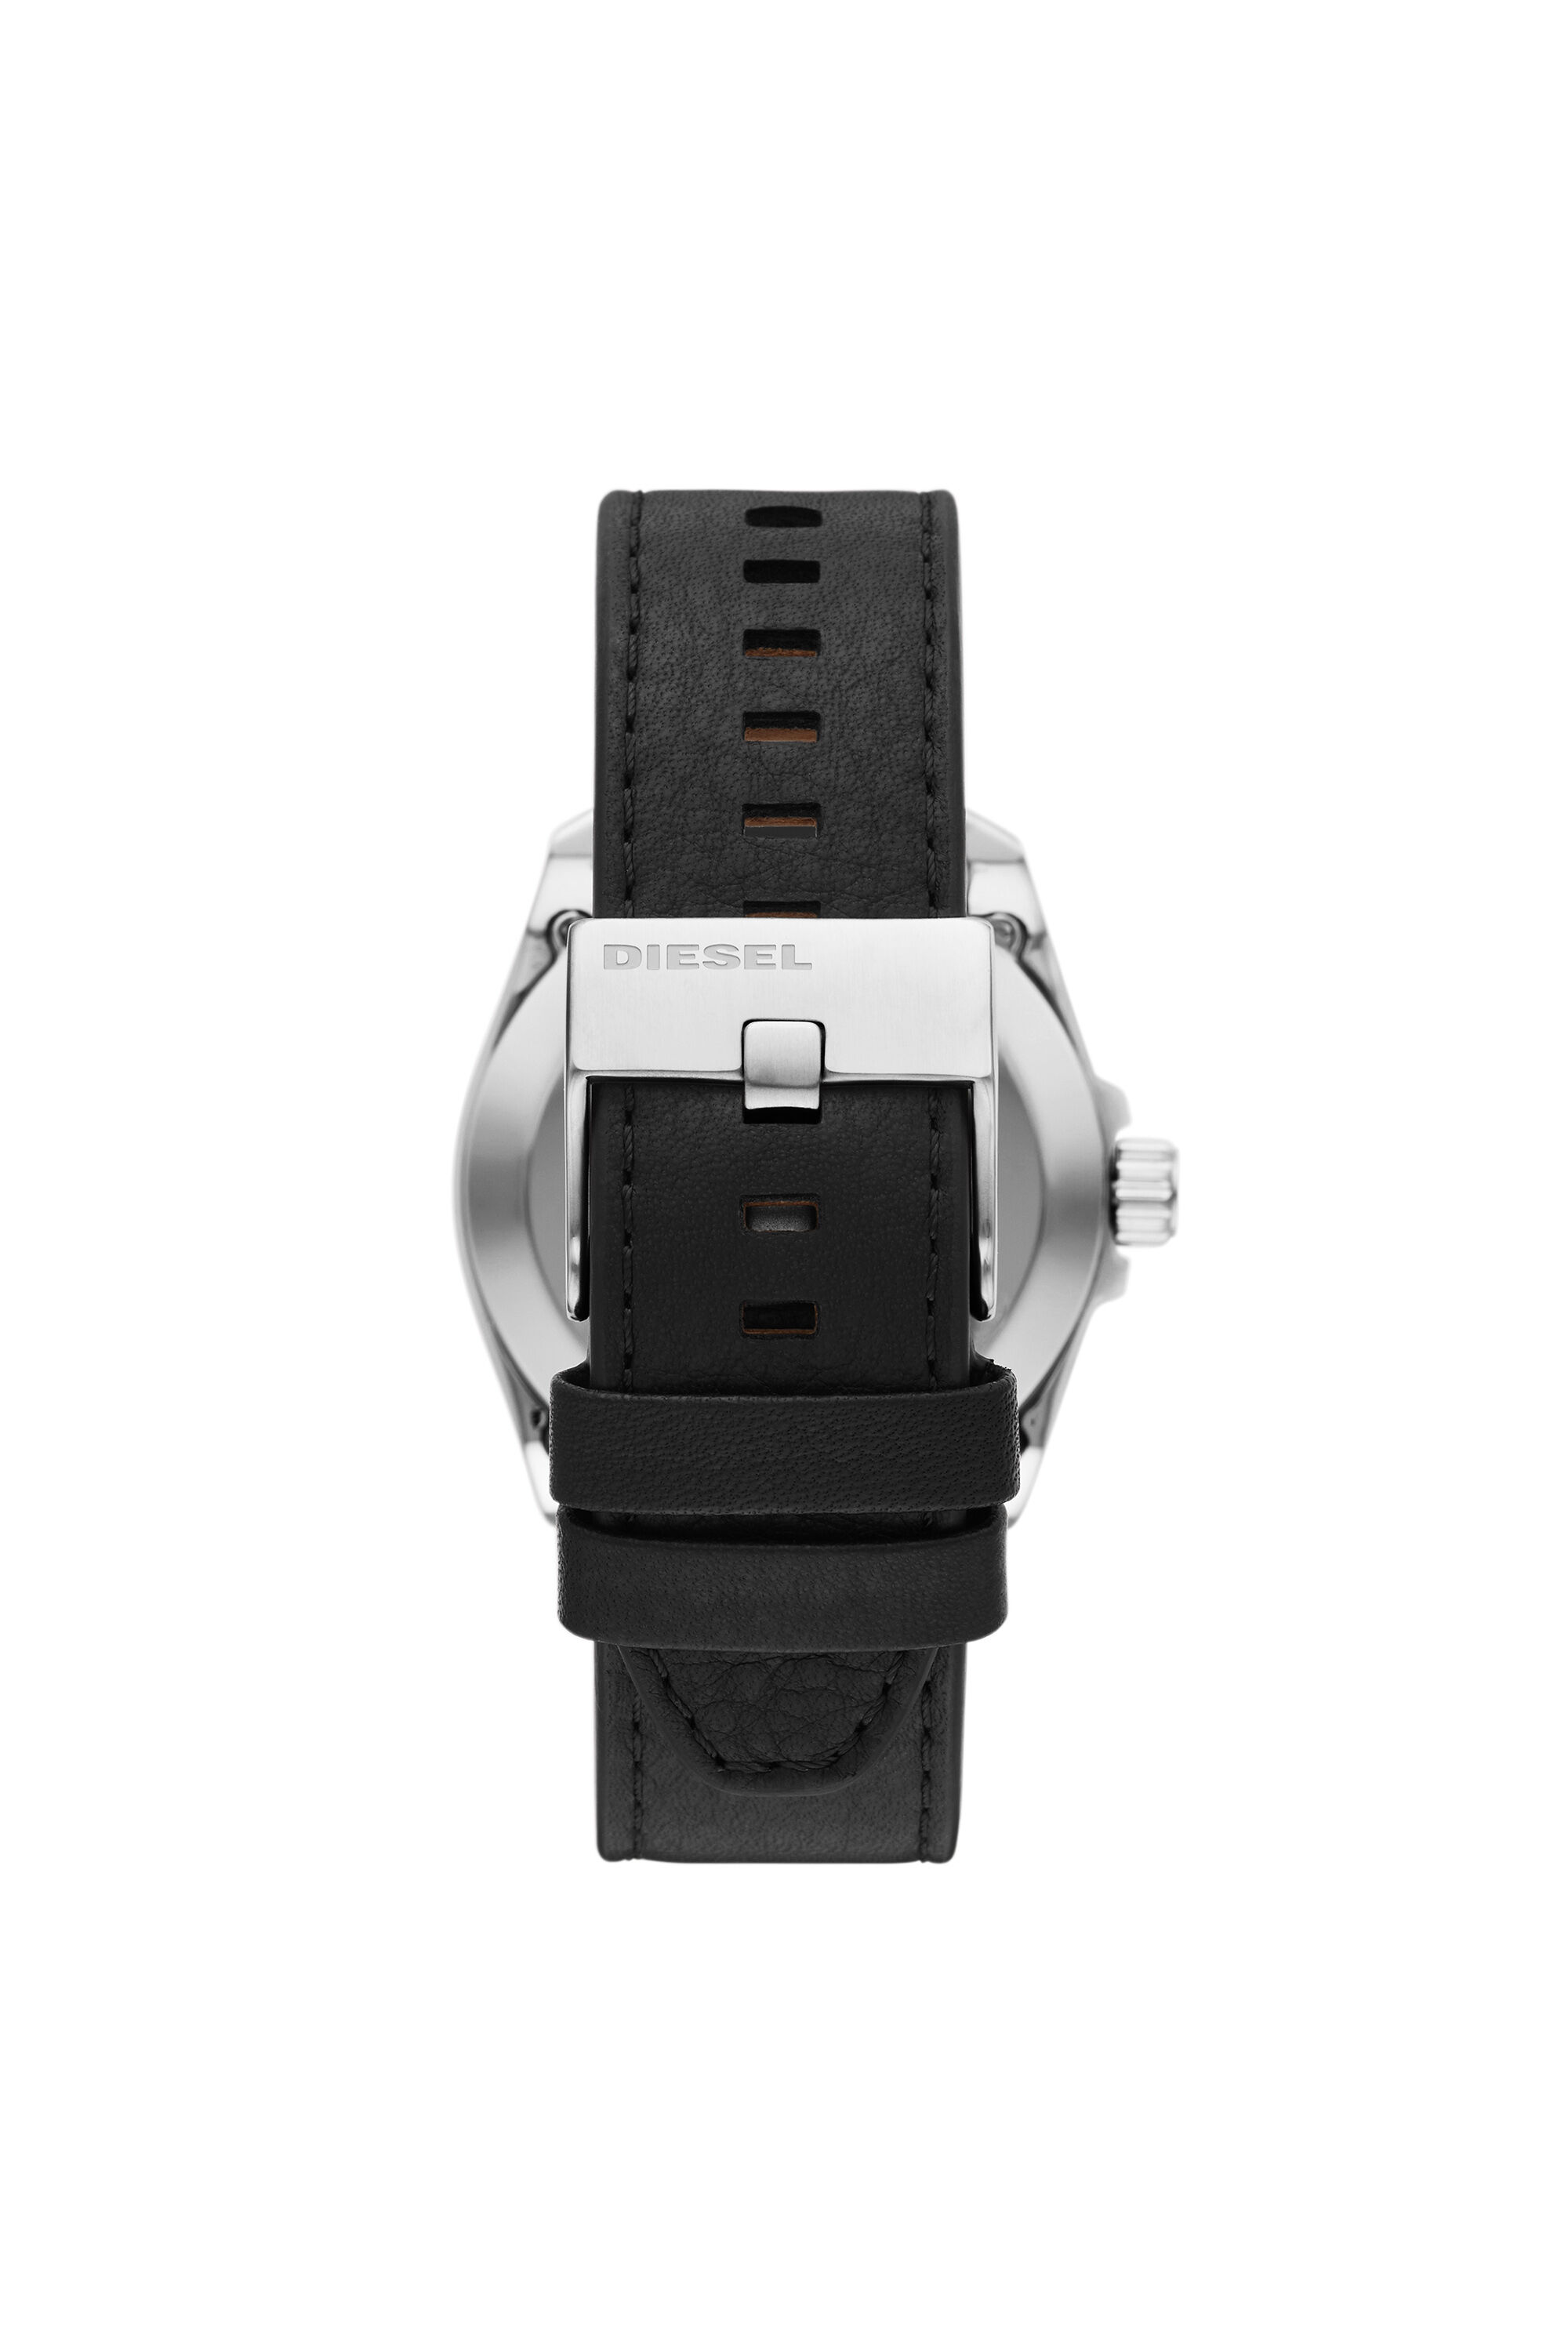 Diesel - DZ1966, Man MS9 automatic three-hand black leather watch in Black - Image 2